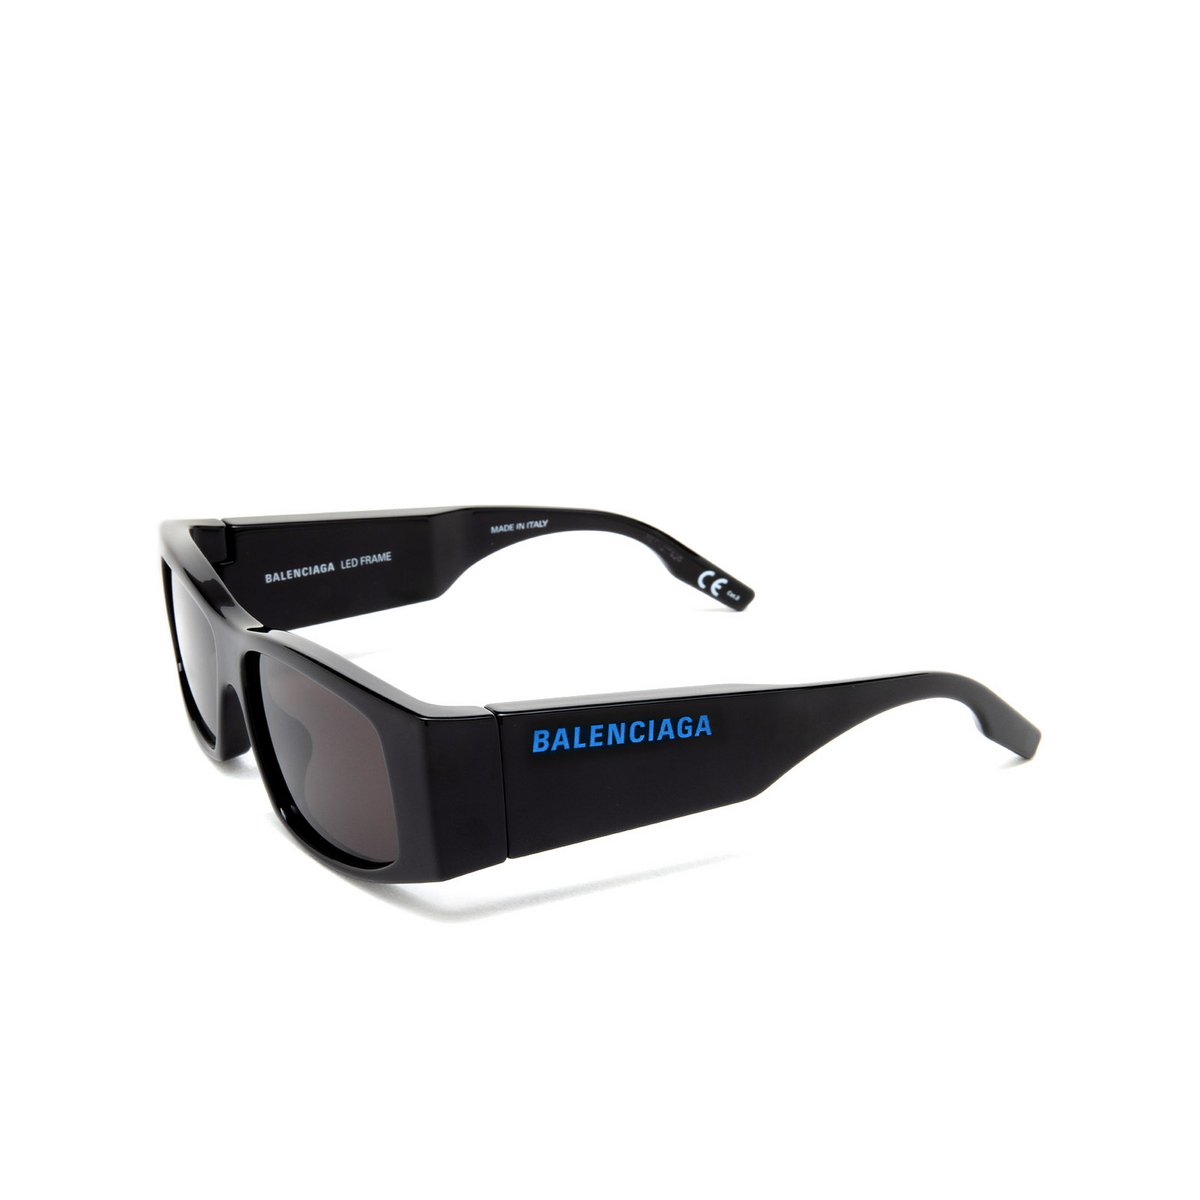 Balenciaga LED Frame Sunglasses 001 Black - three-quarters view